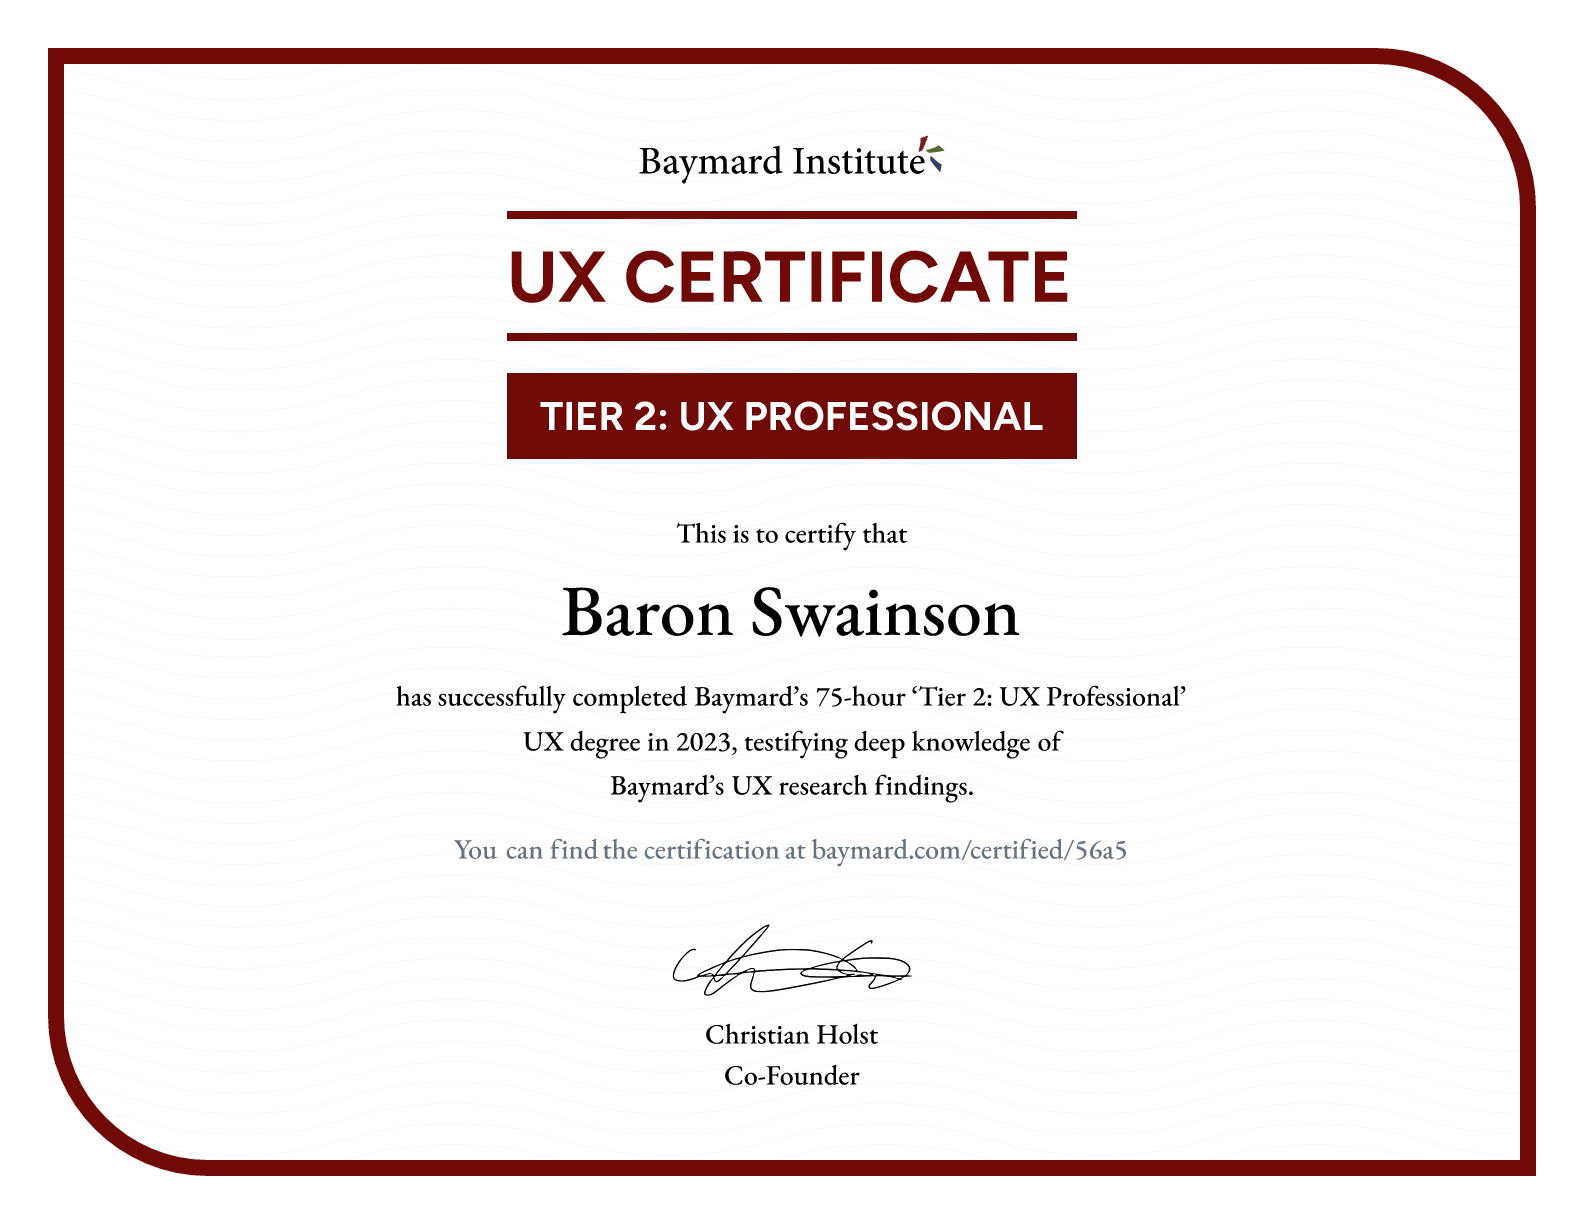 Baron Swainson’s certificate